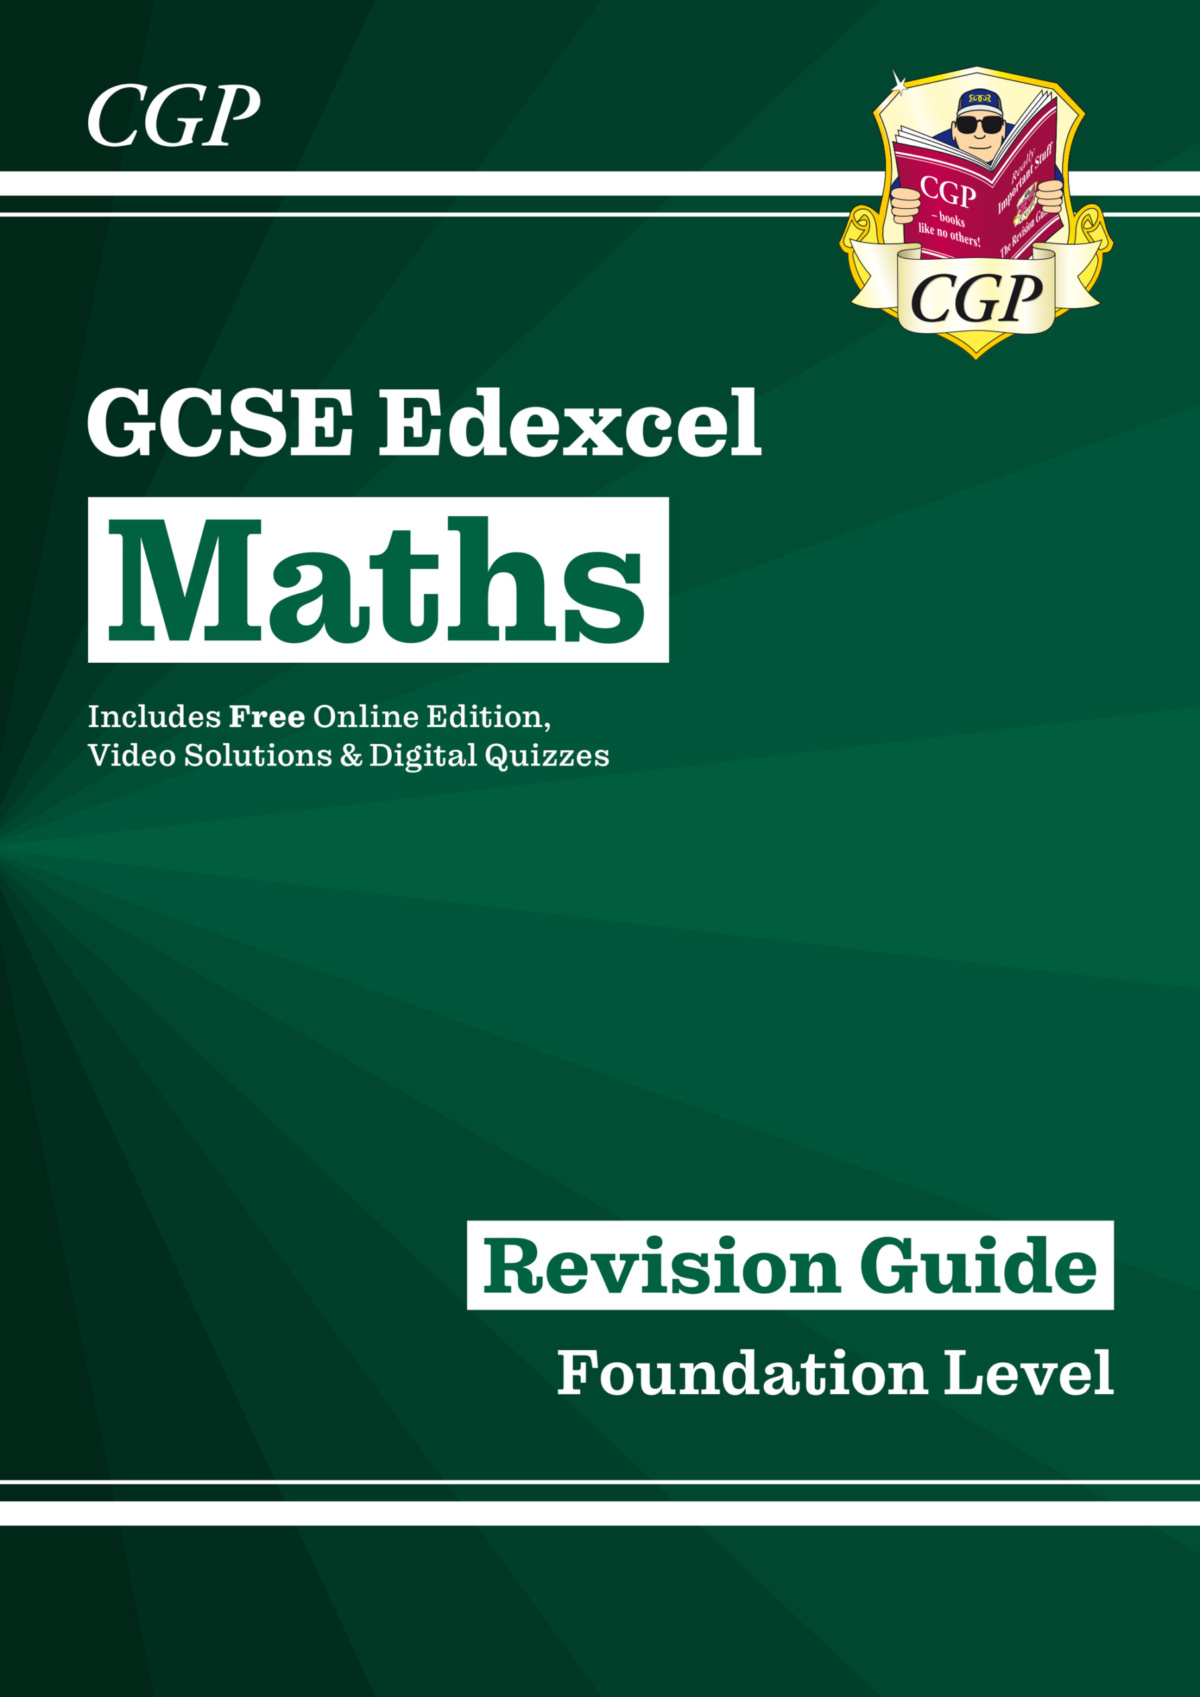 edexcel gcse maths higher homework book answers oxford